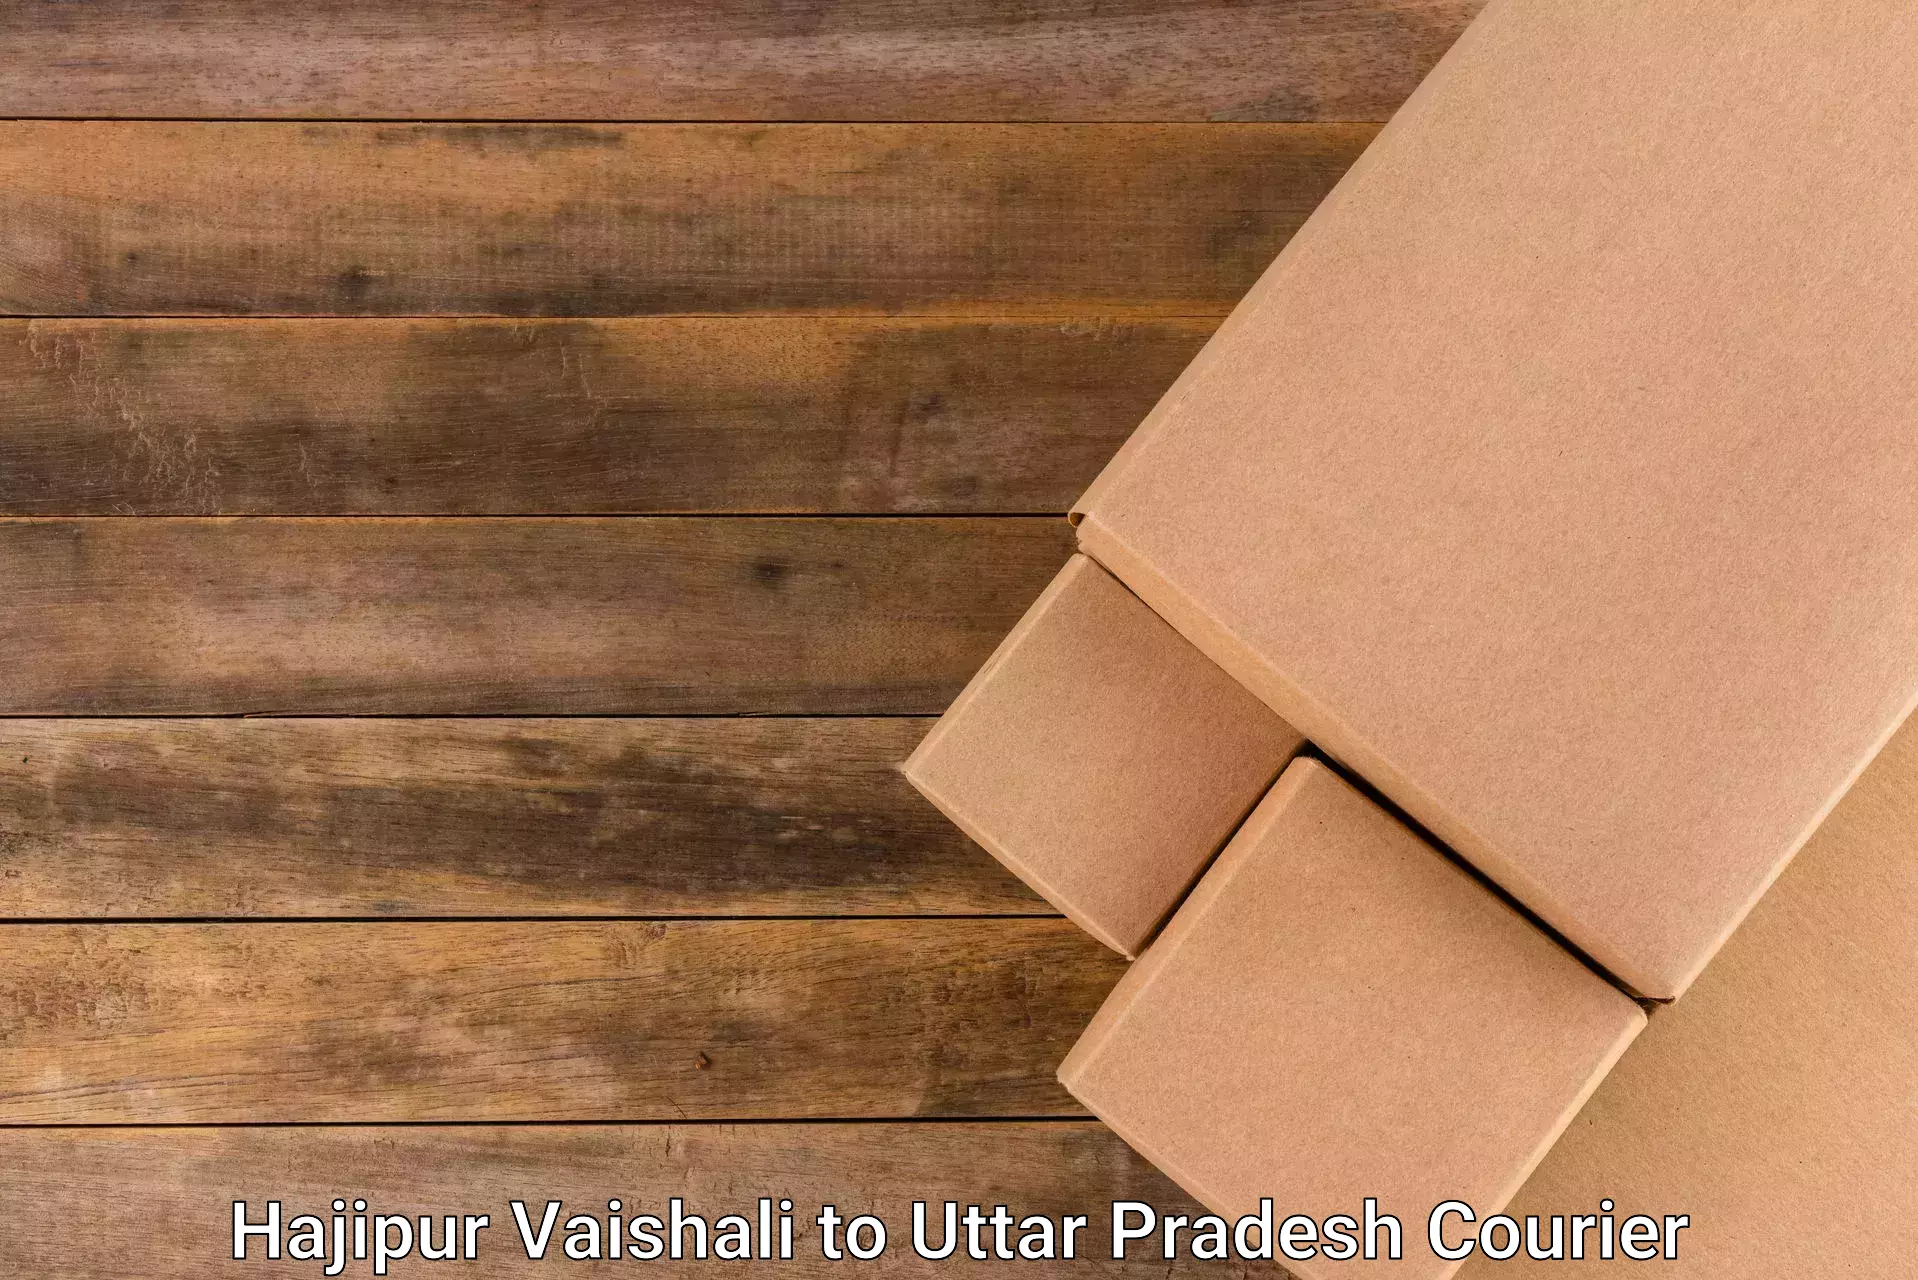 Full-service courier options Hajipur Vaishali to Bisalpur